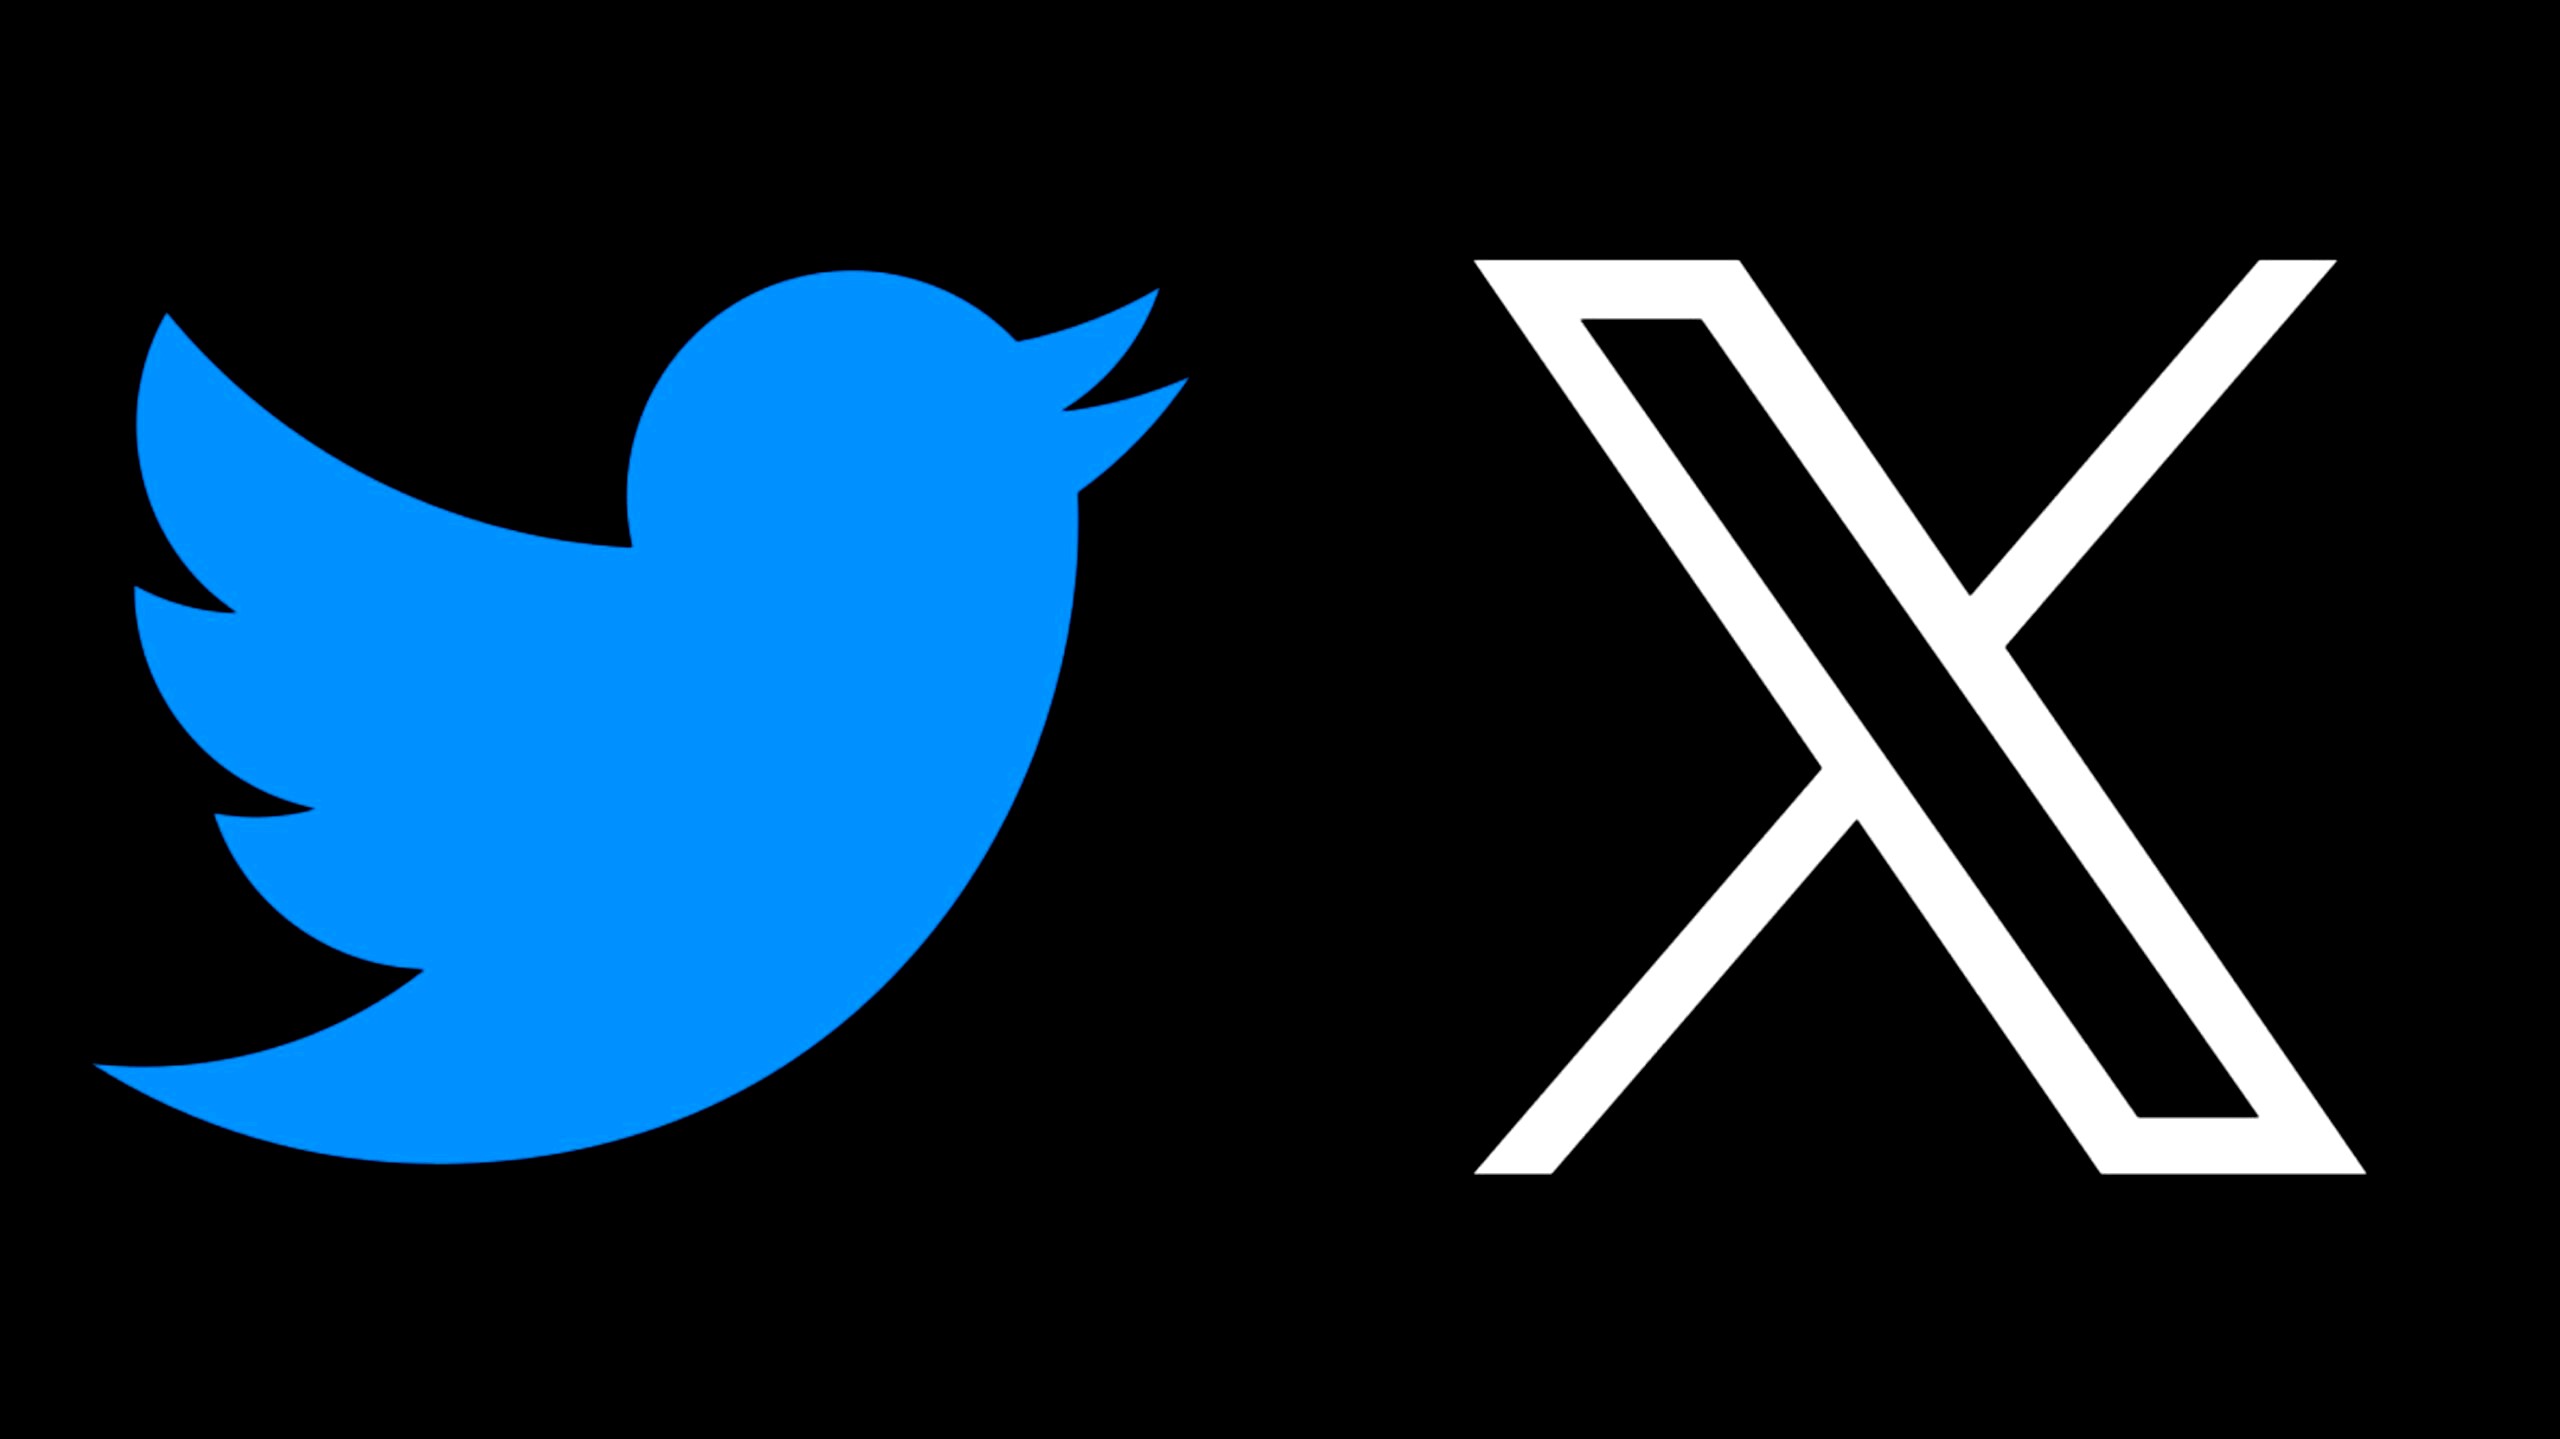 Twitter Logo Changed